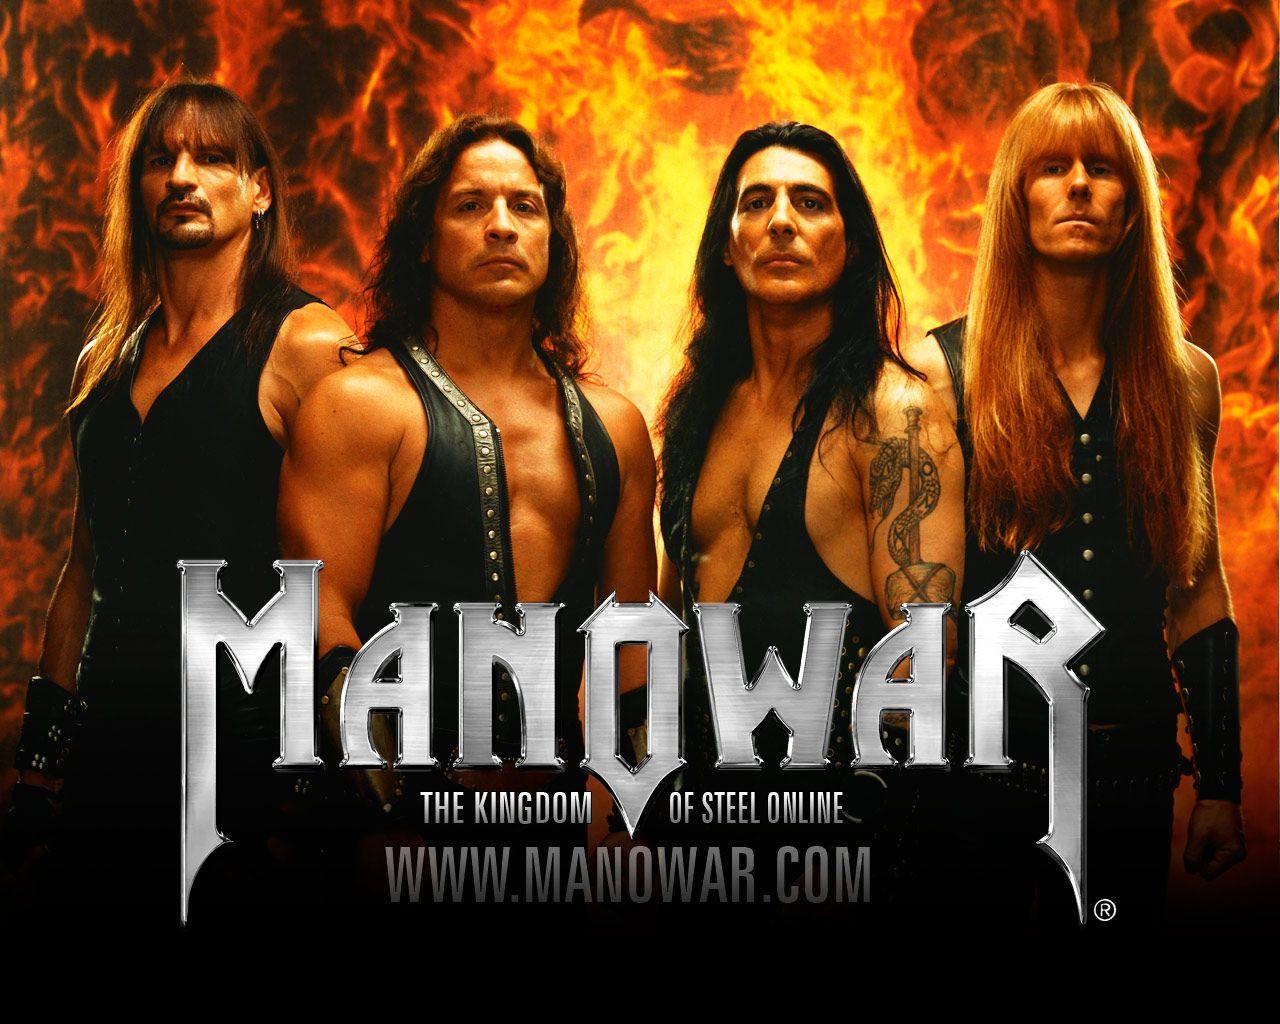 Manowar image Manowar HD wallpaper and background photo